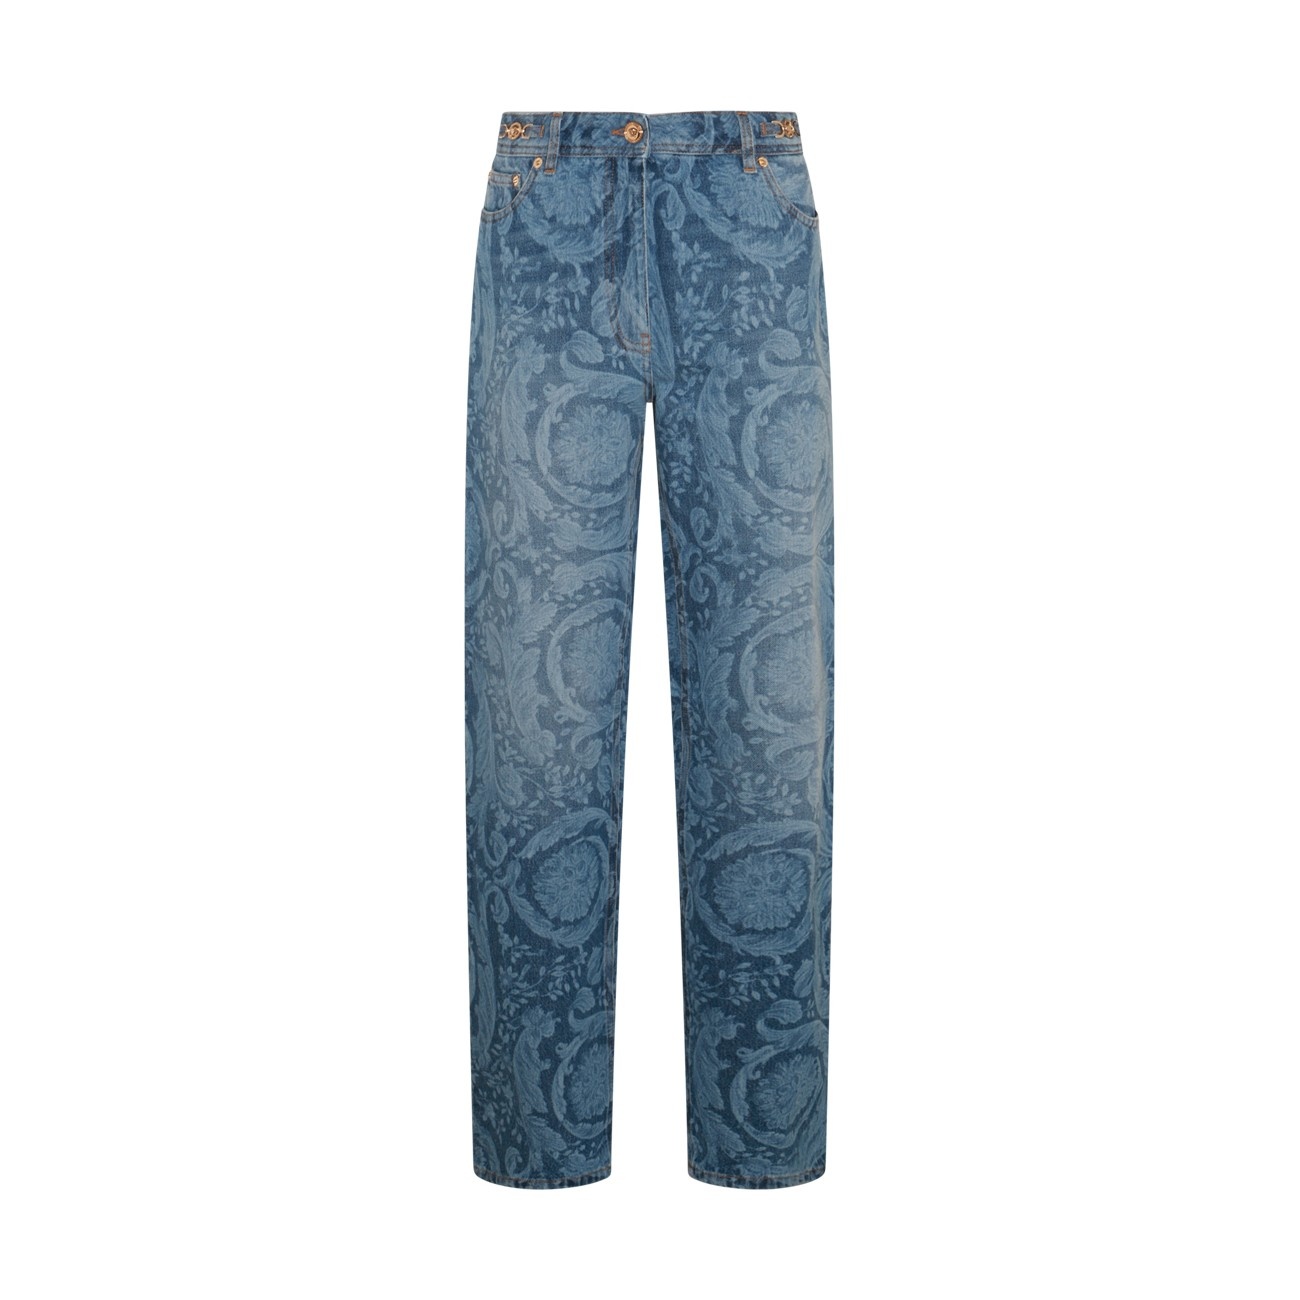 medium blue cotton jeans - 1